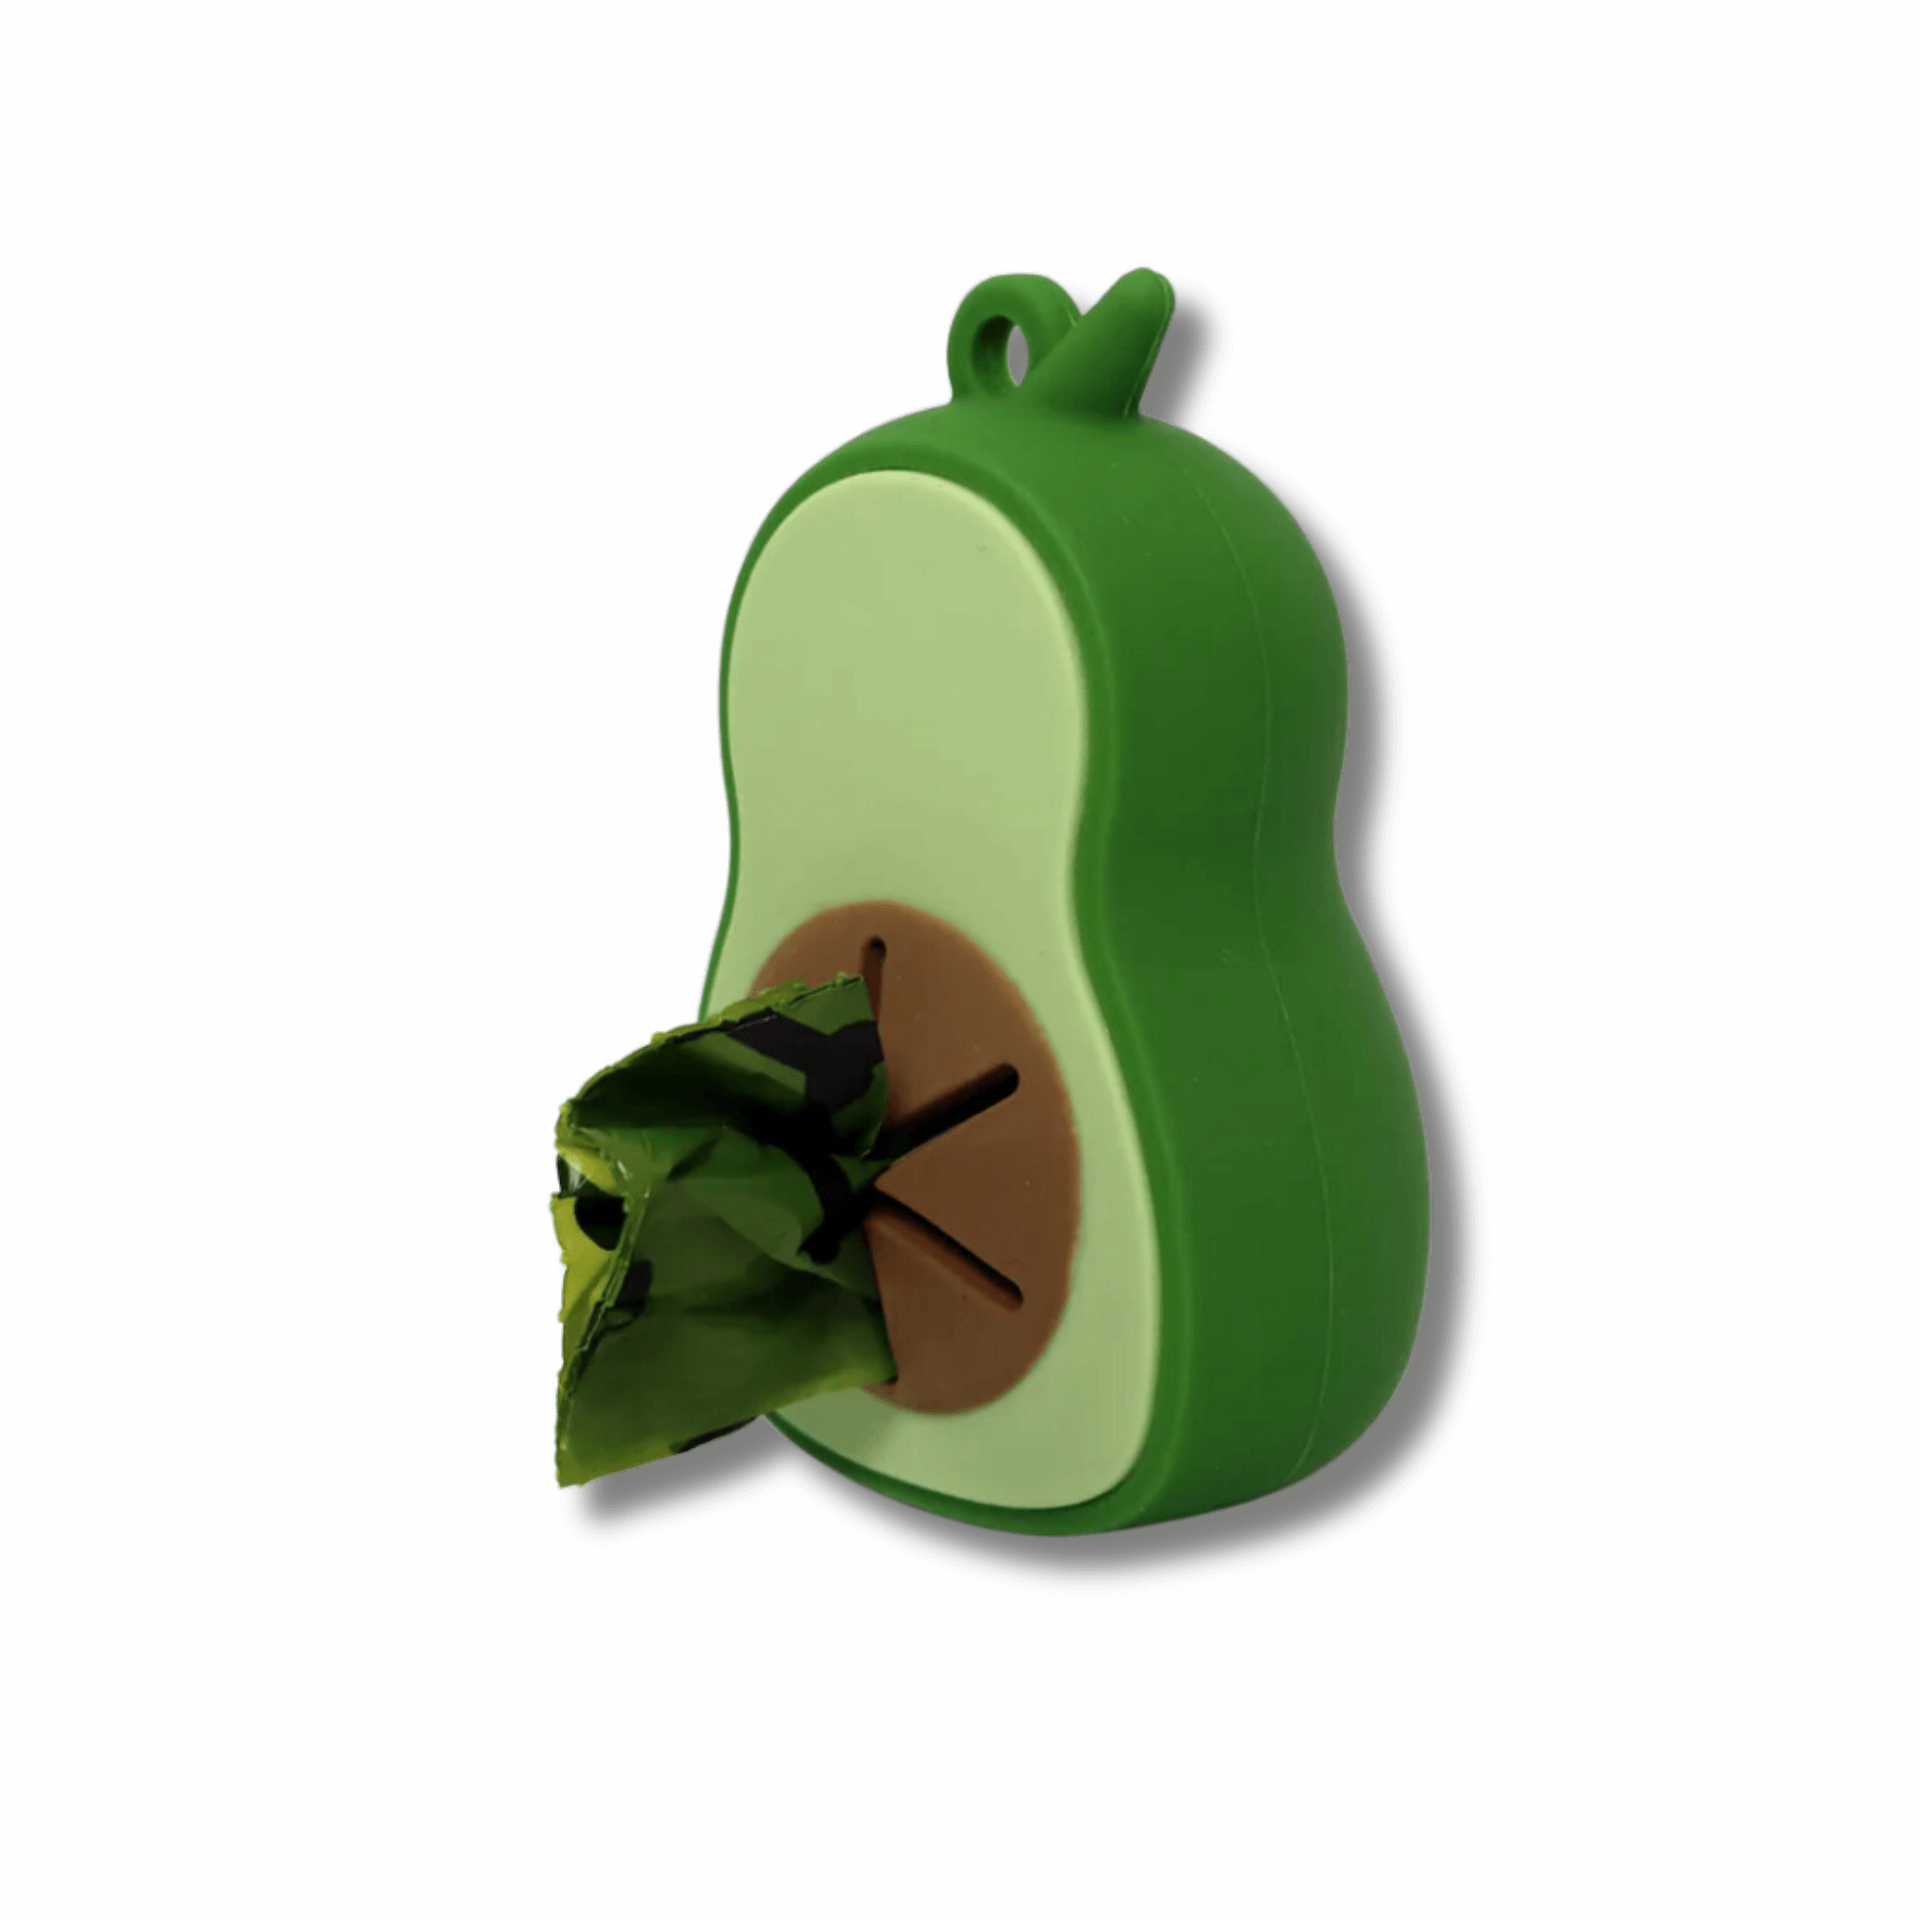 avocado themed poo bag dispenser, let's pawty